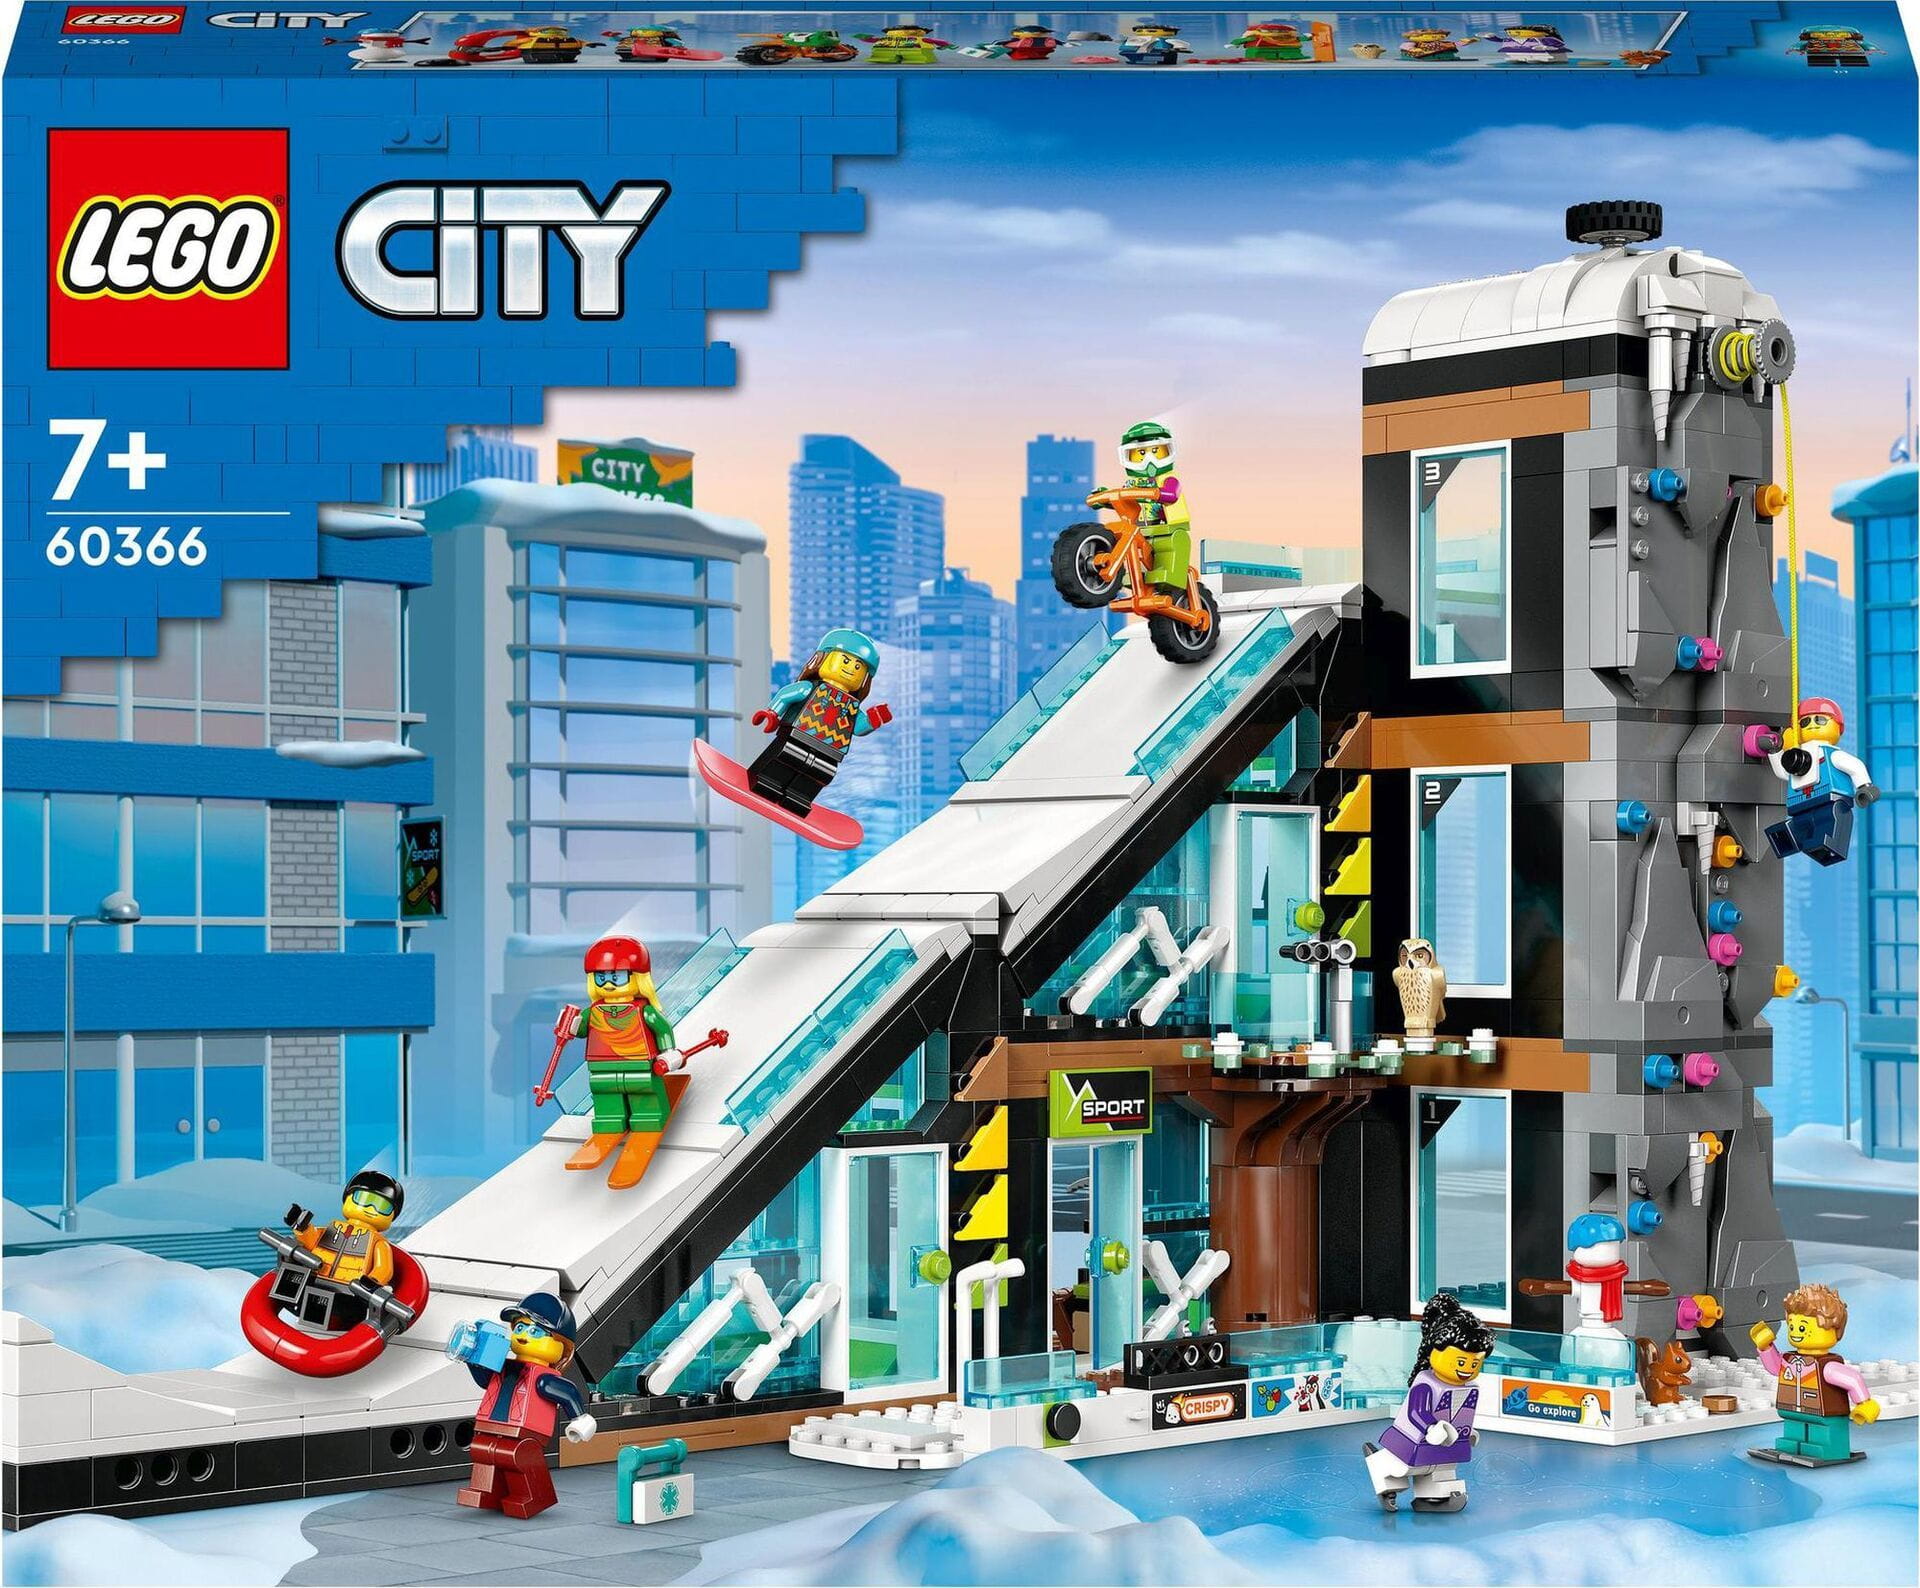 LEGO City Wintersportpark Set